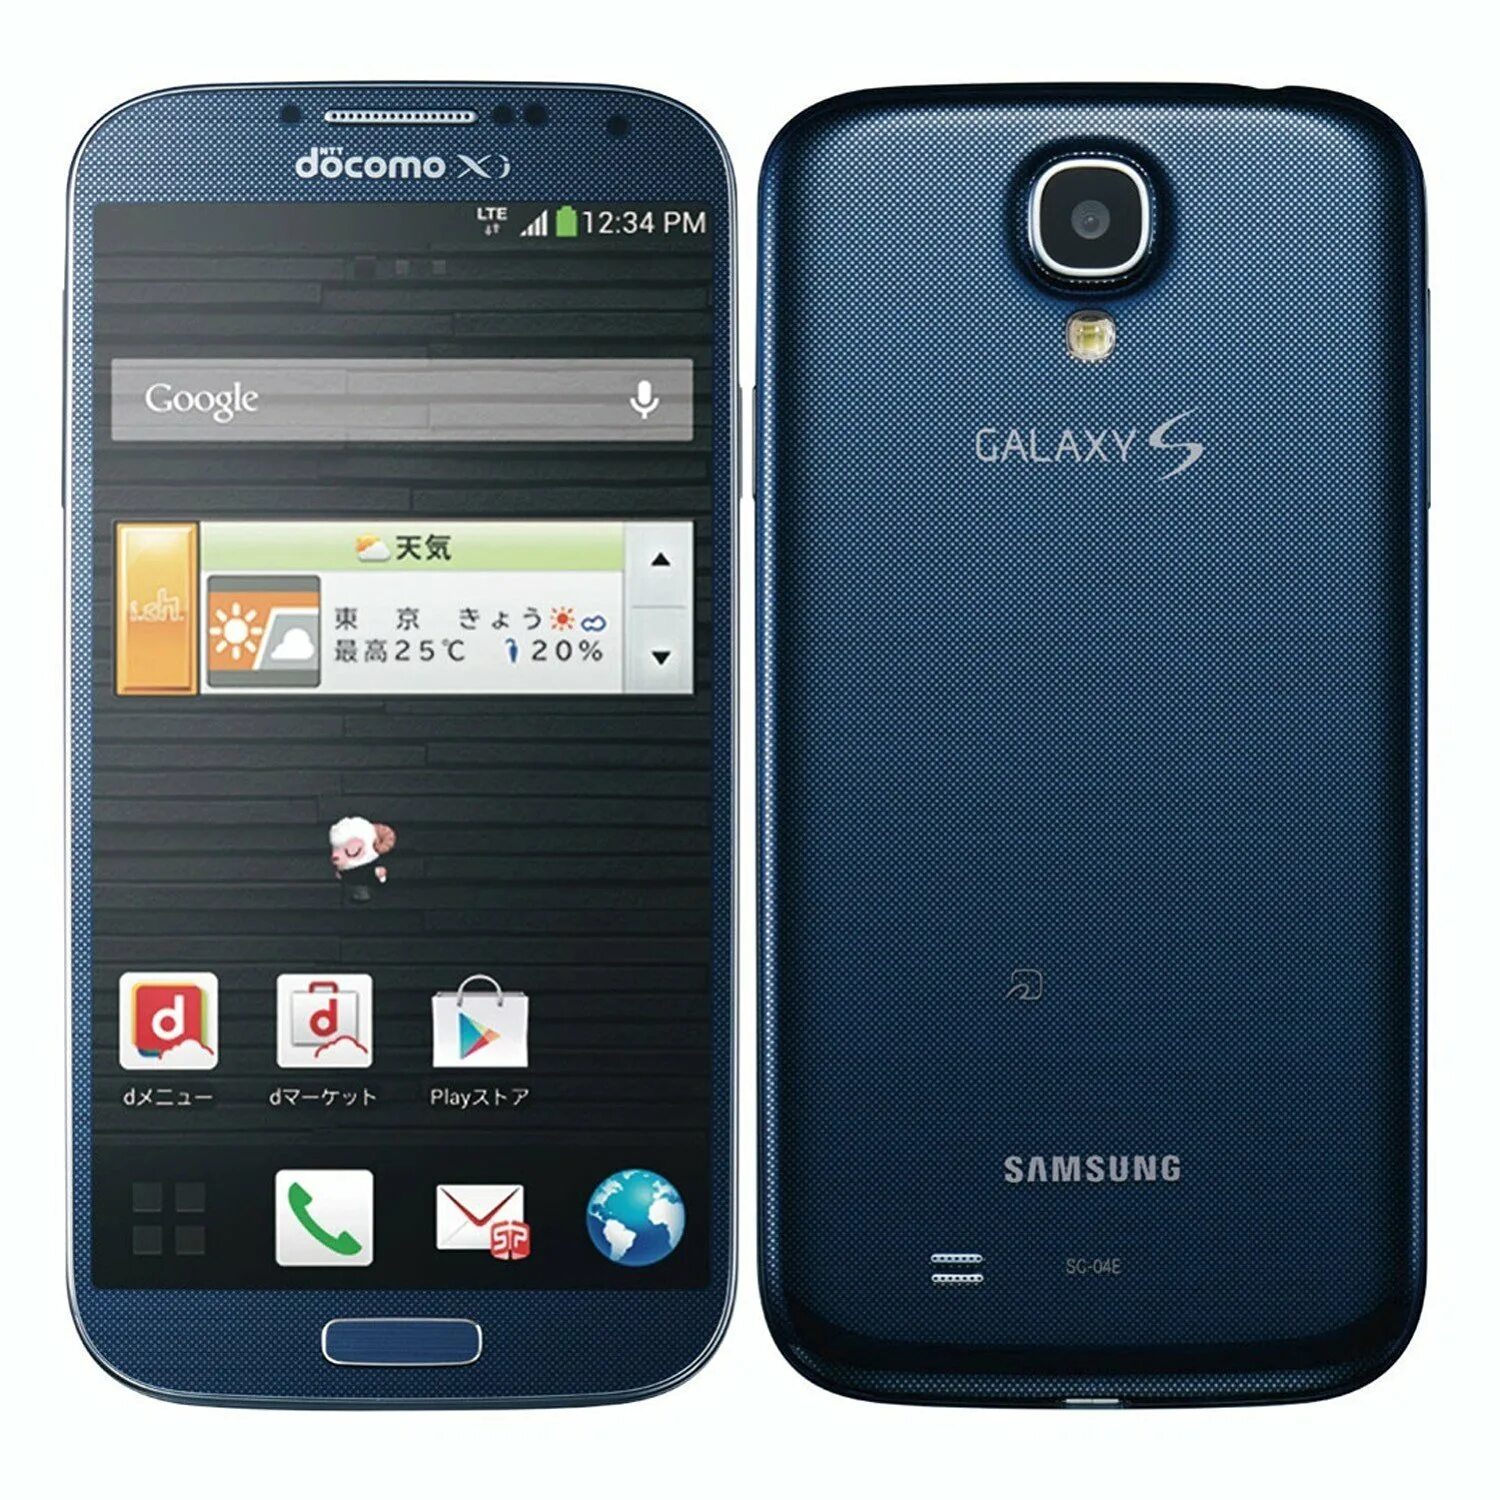 Samsung galaxy 34. Docomo SC-04e Galaxy s4. Galaxy s4 SC-04e. Samsung Galaxy a34. NTT docomo Samsung.